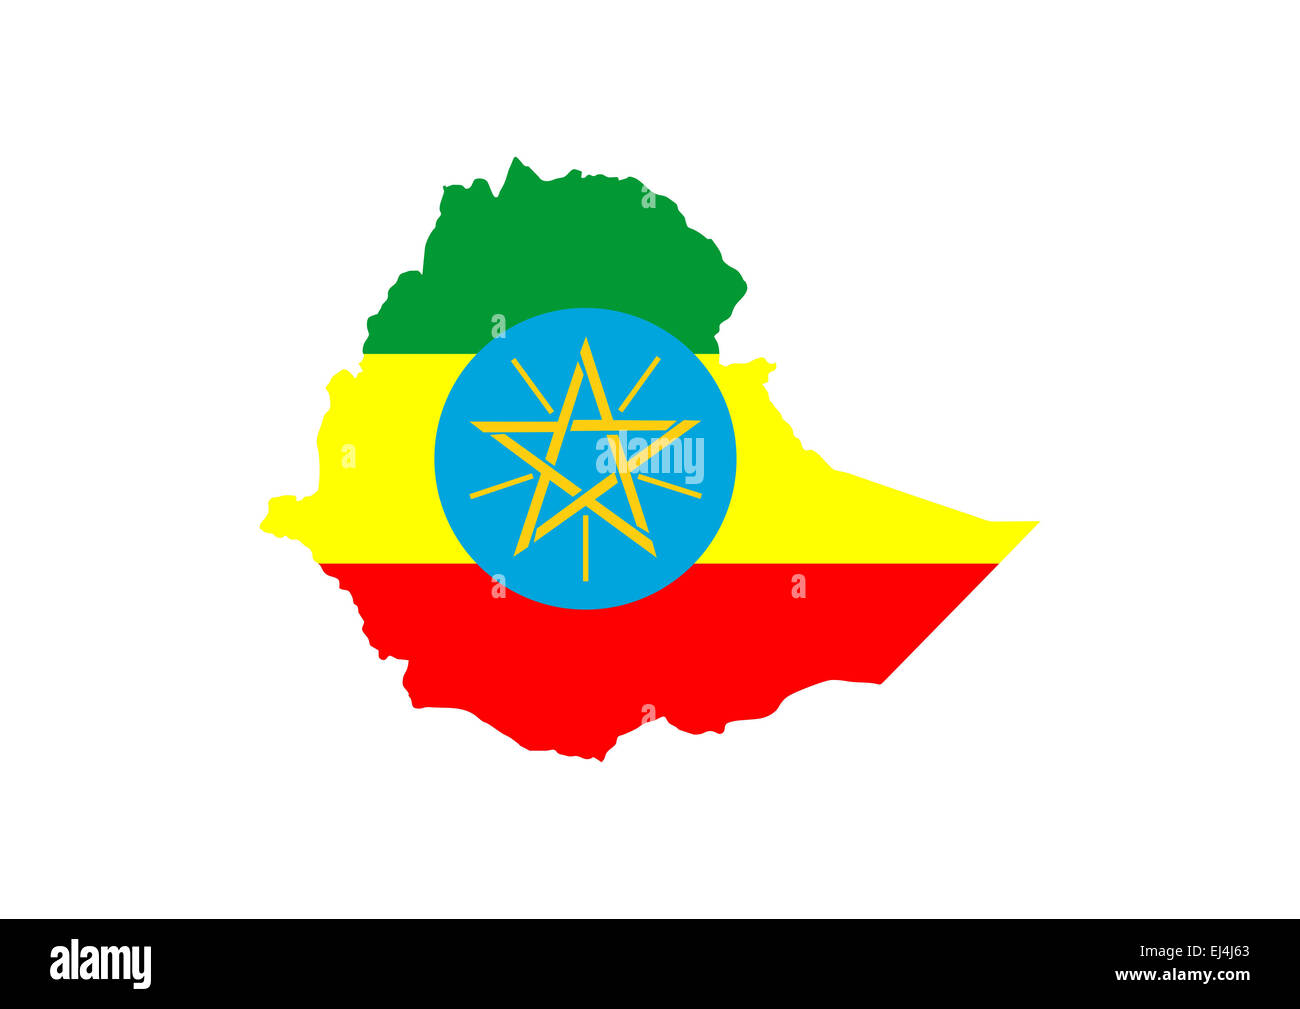 https://c8.alamy.com/comp/EJ4J63/ethiopia-country-flag-map-shape-symbol-illustration-EJ4J63.jpg